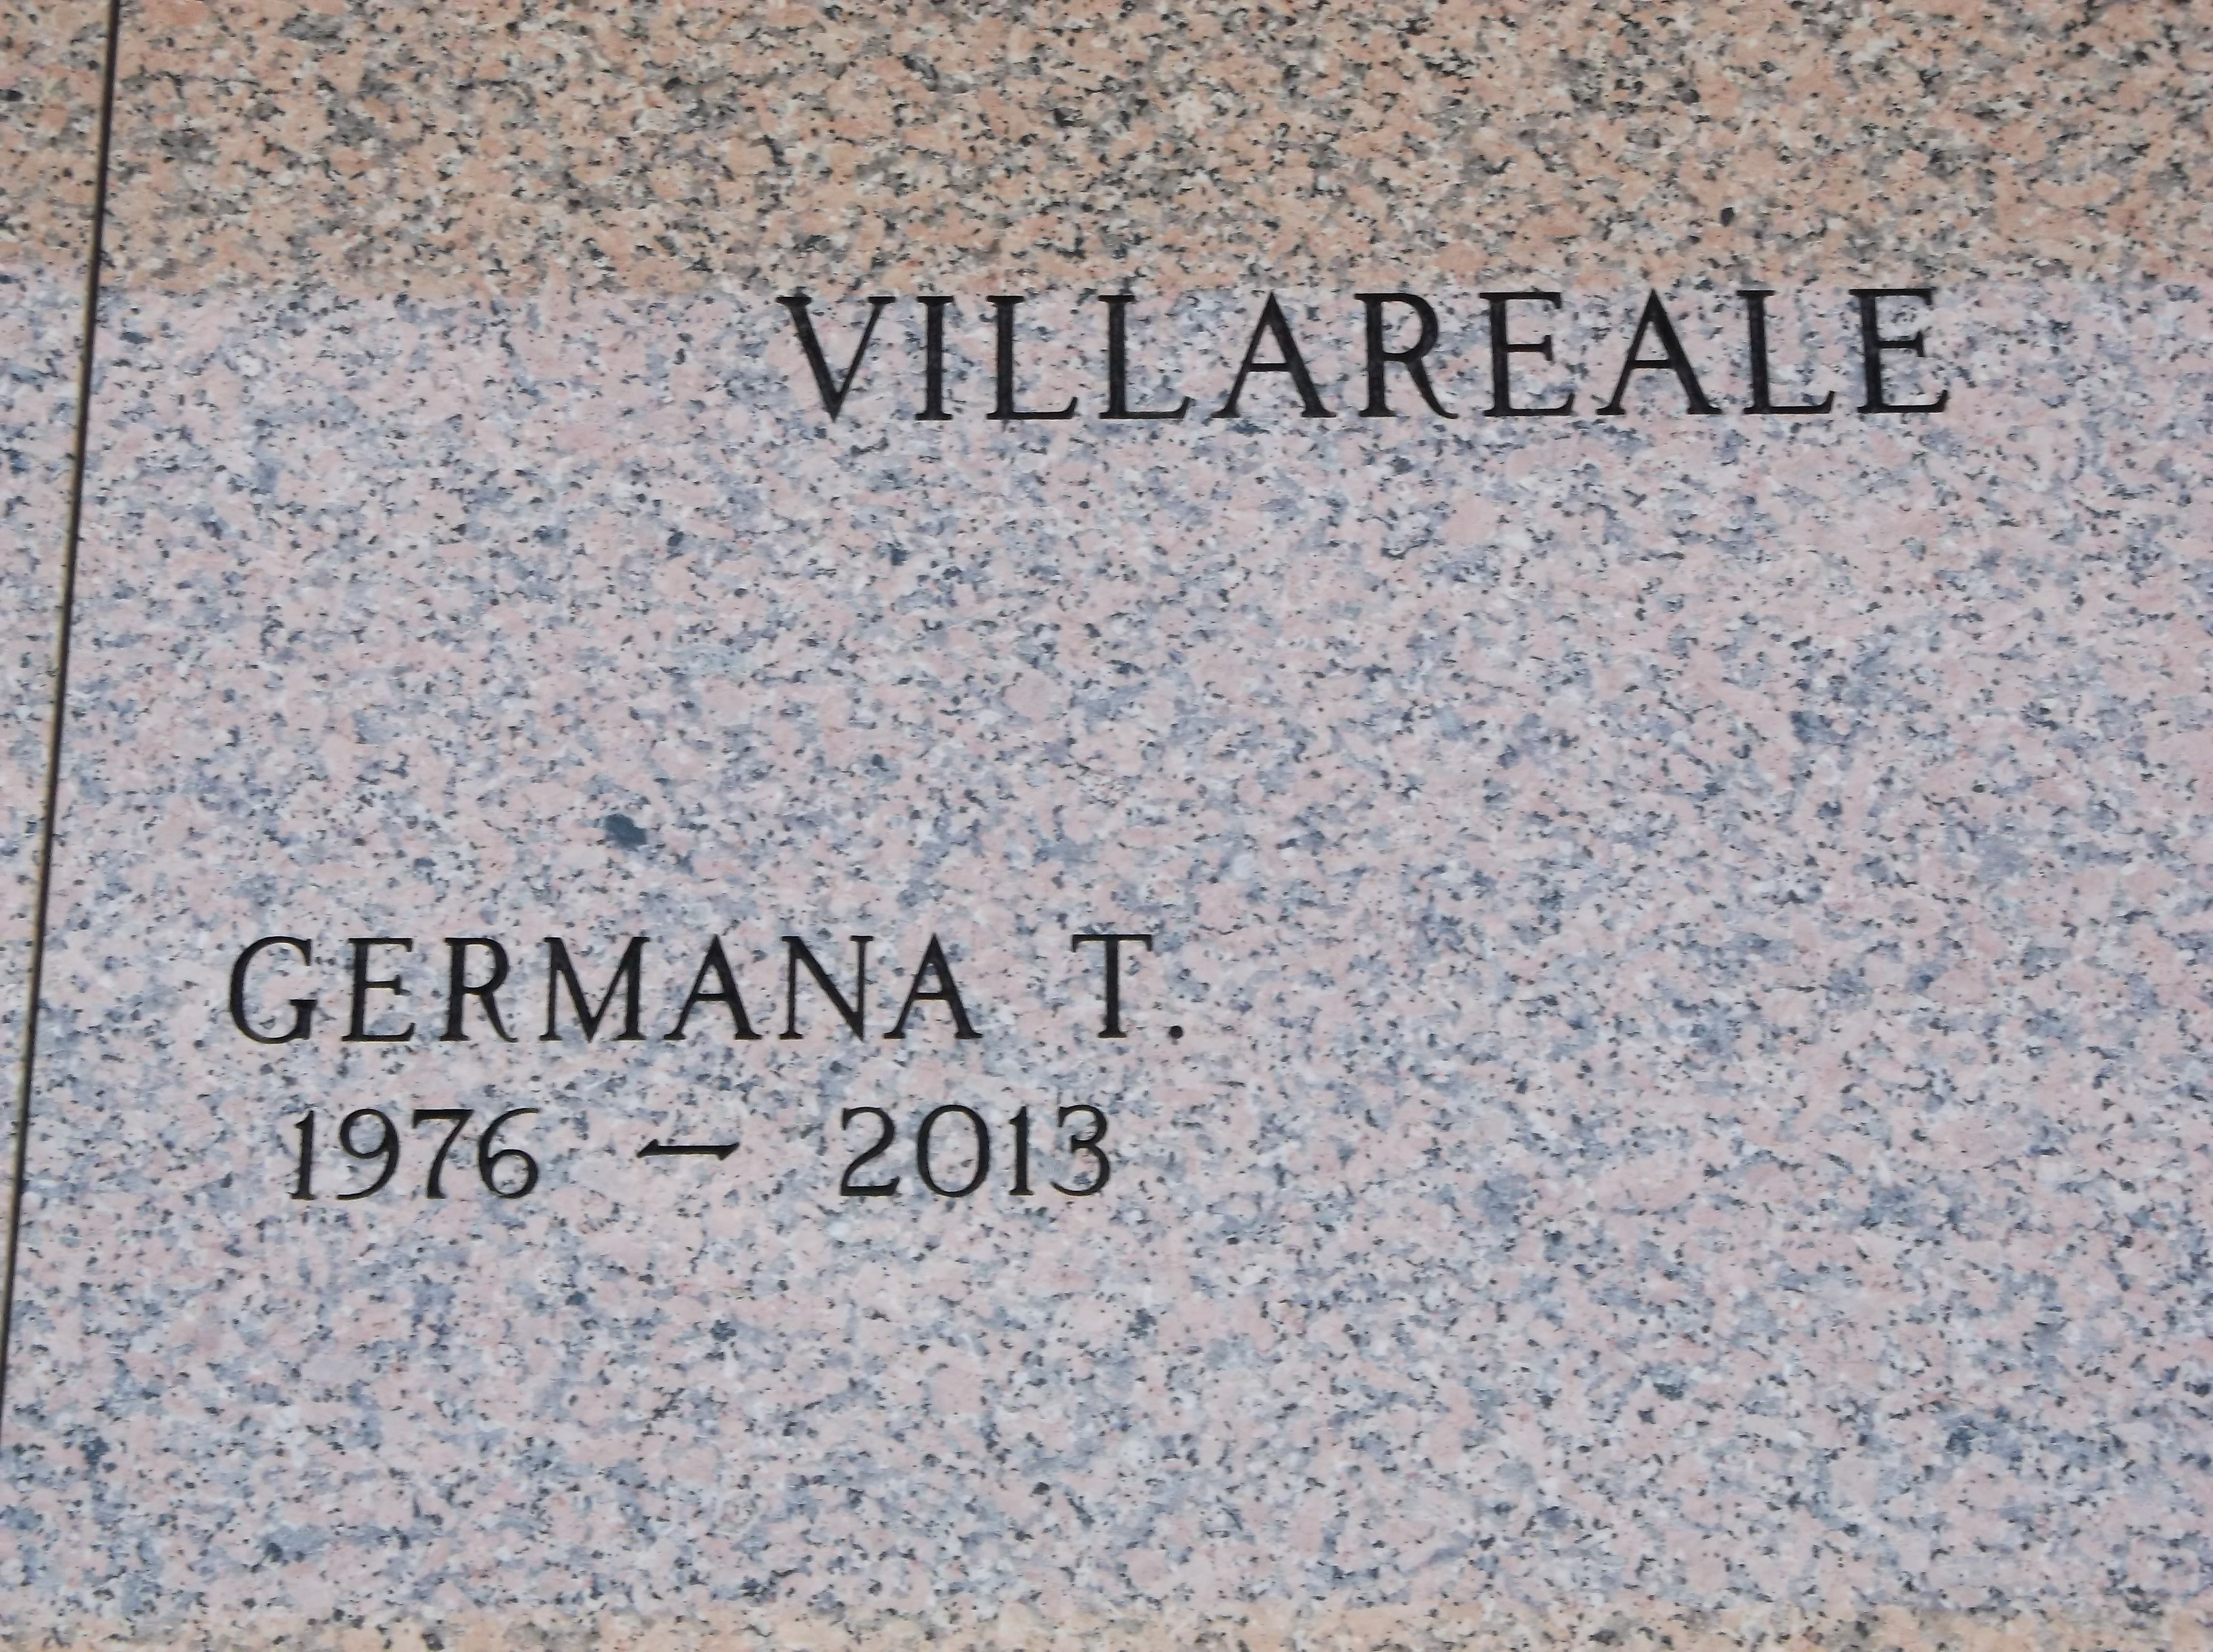 Germana T Villareale